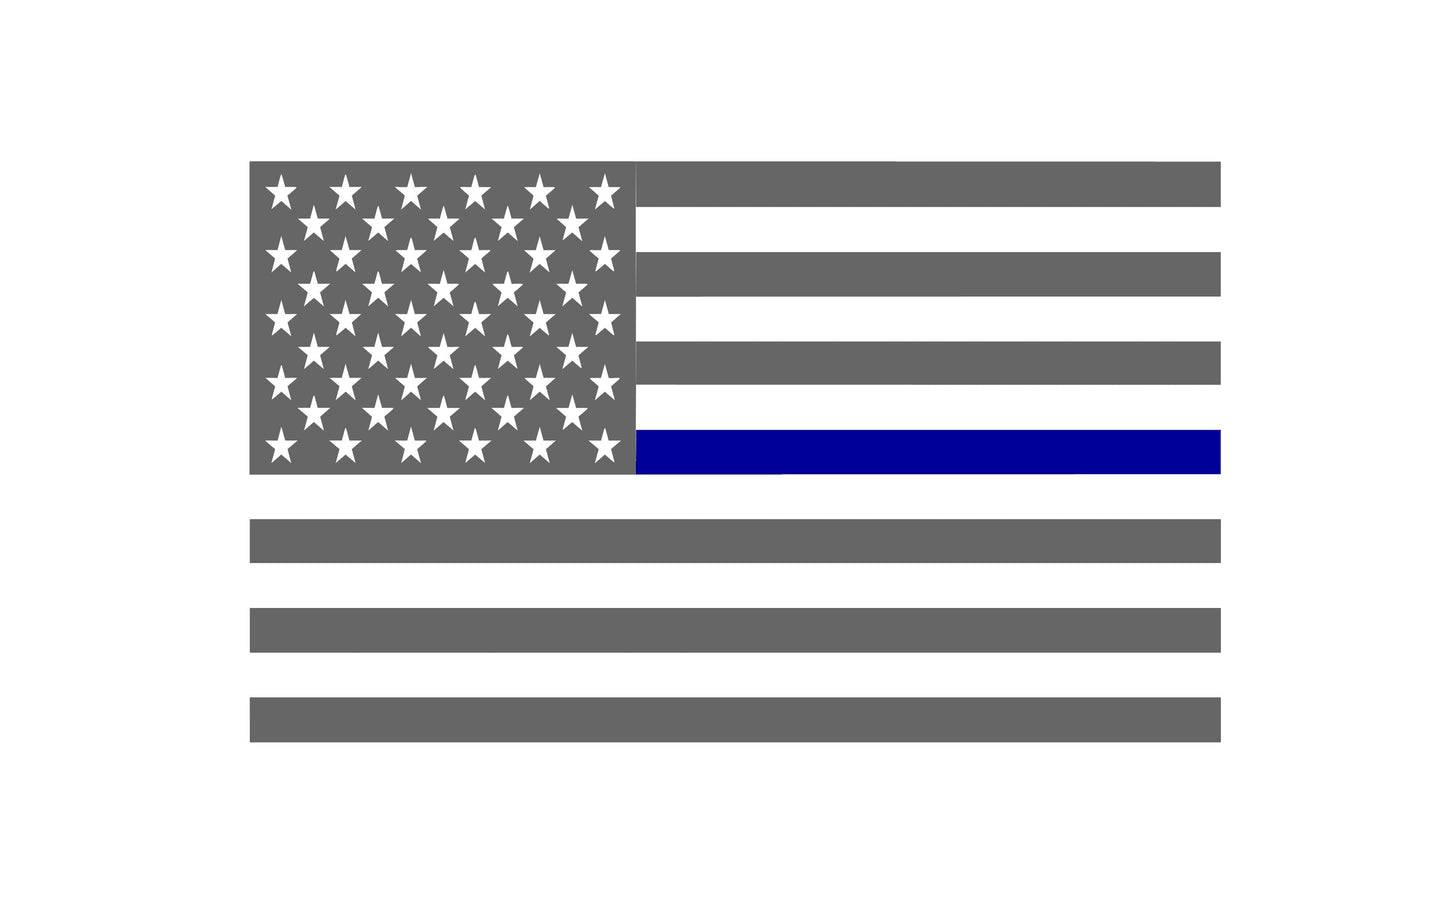 SET OF AMERICAN FLAG " BLUE LIVES MATTER" VINYL DECALS FOR CARS, JEEPS, TRUCKS, WINDOWS...